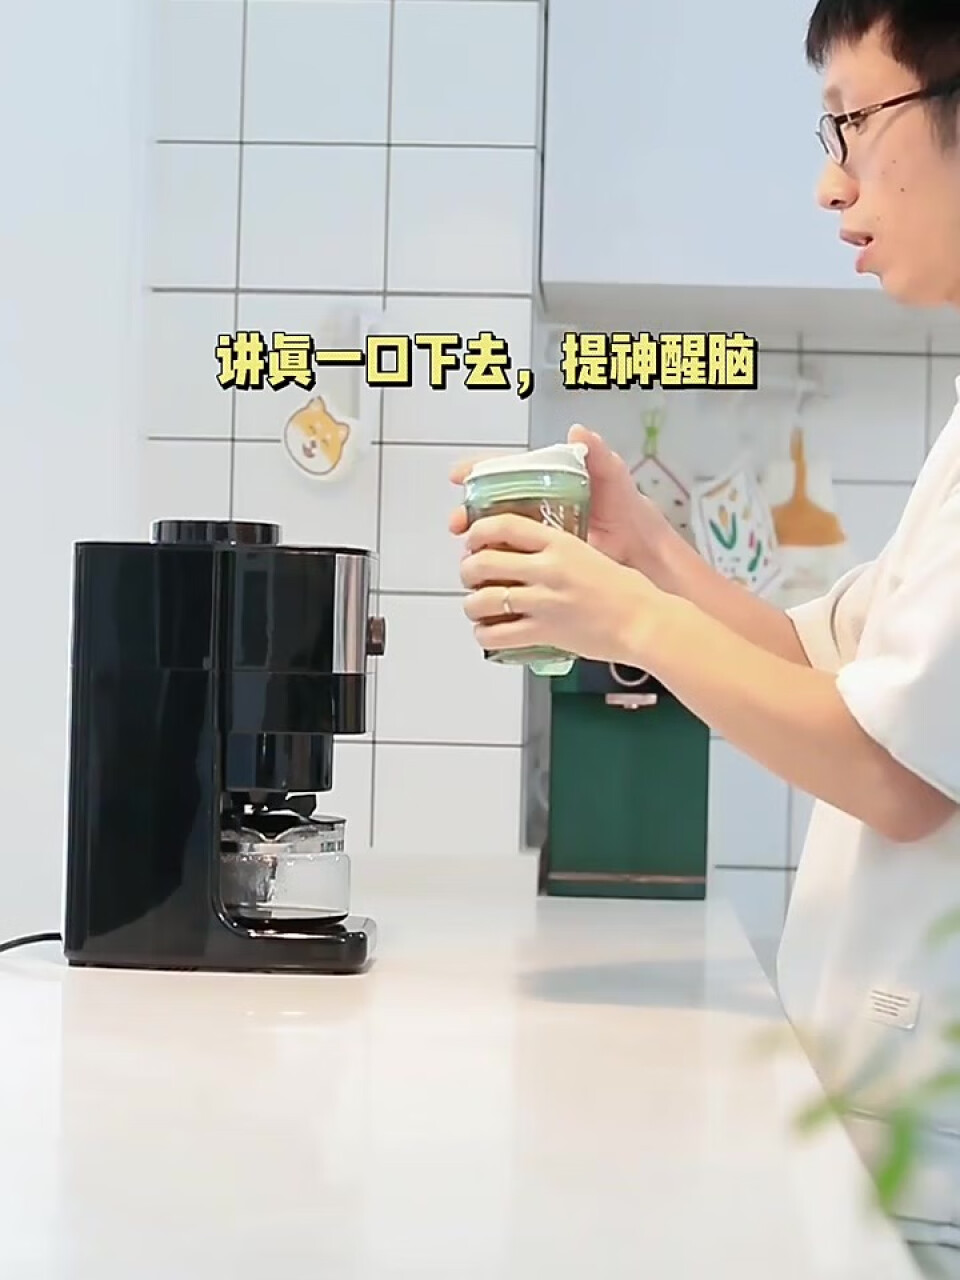 primitalia 浦美泰 美式咖啡机 咖啡机家用全自动 豆粉两用 咖啡豆研磨防堵粉 GA60,第4张